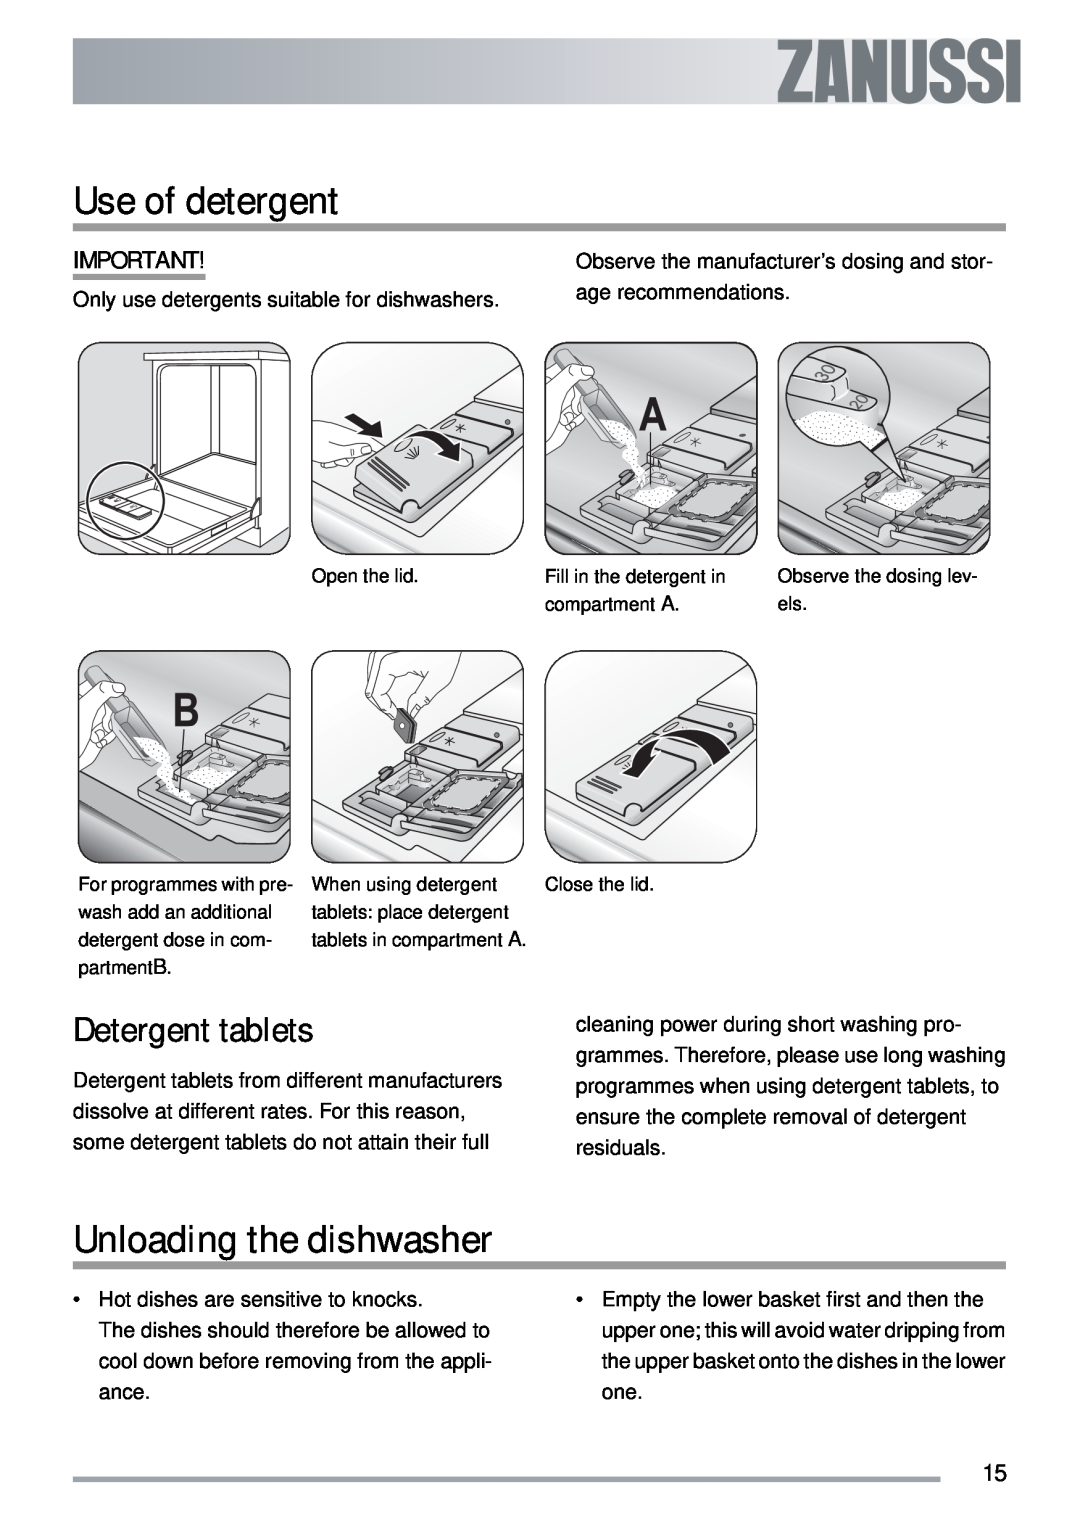 Zanussi ZDTS 101 user manual Use of detergent, Unloading the dishwasher, Detergent tablets 